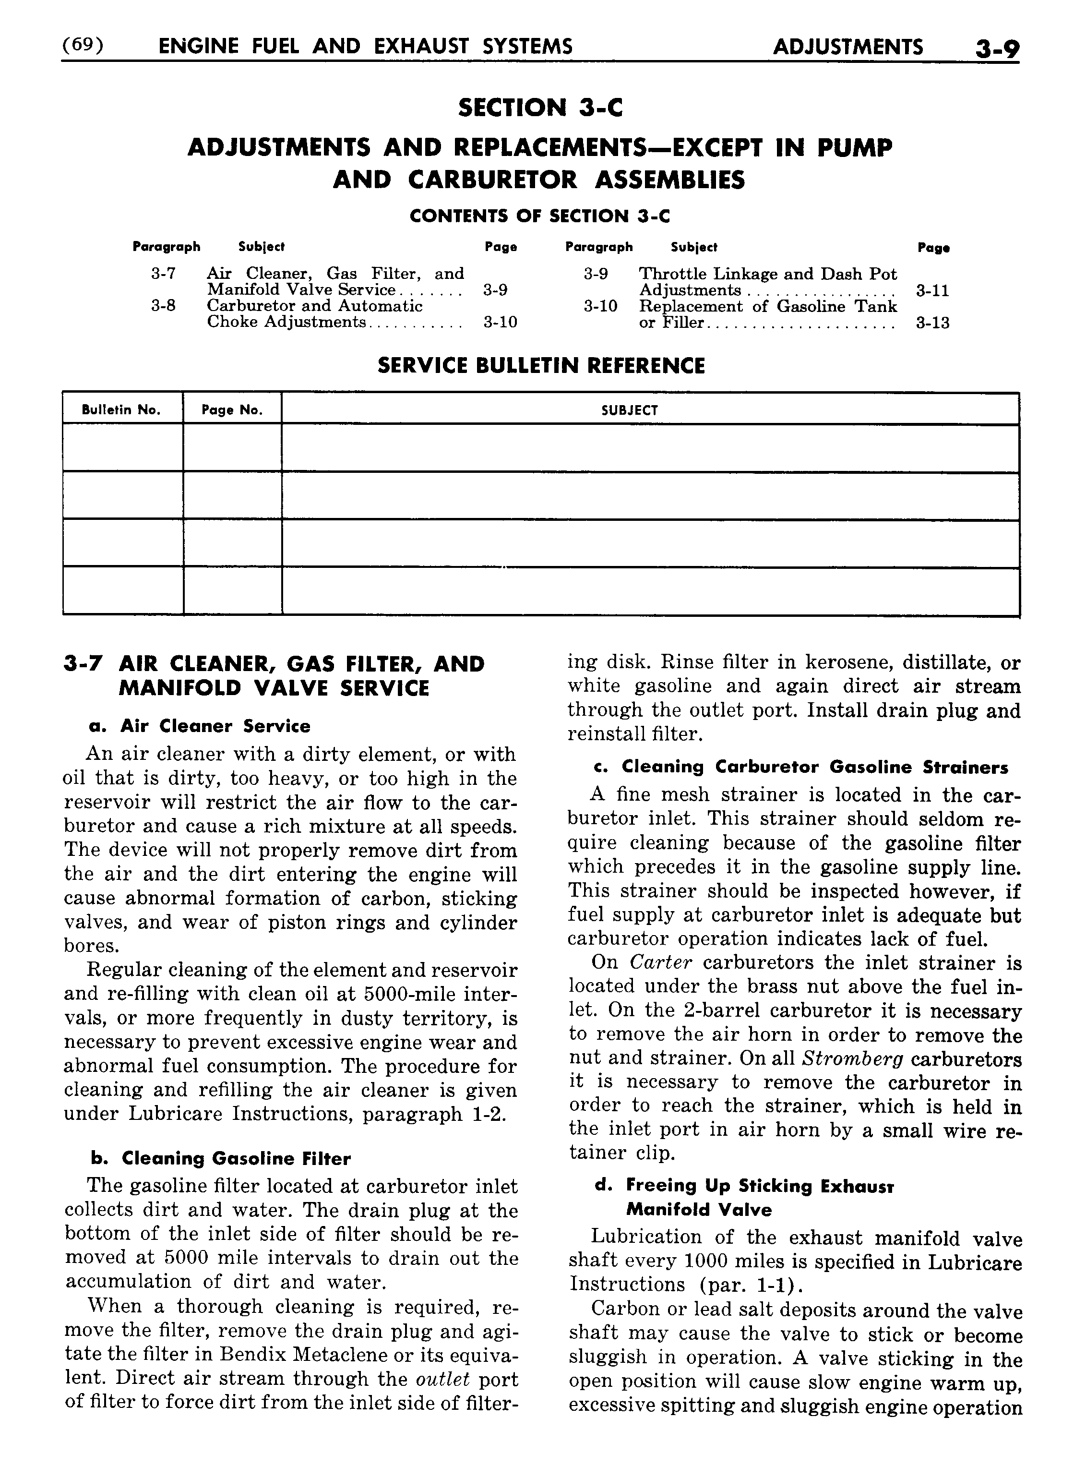 n_04 1955 Buick Shop Manual - Engine Fuel & Exhaust-009-009.jpg